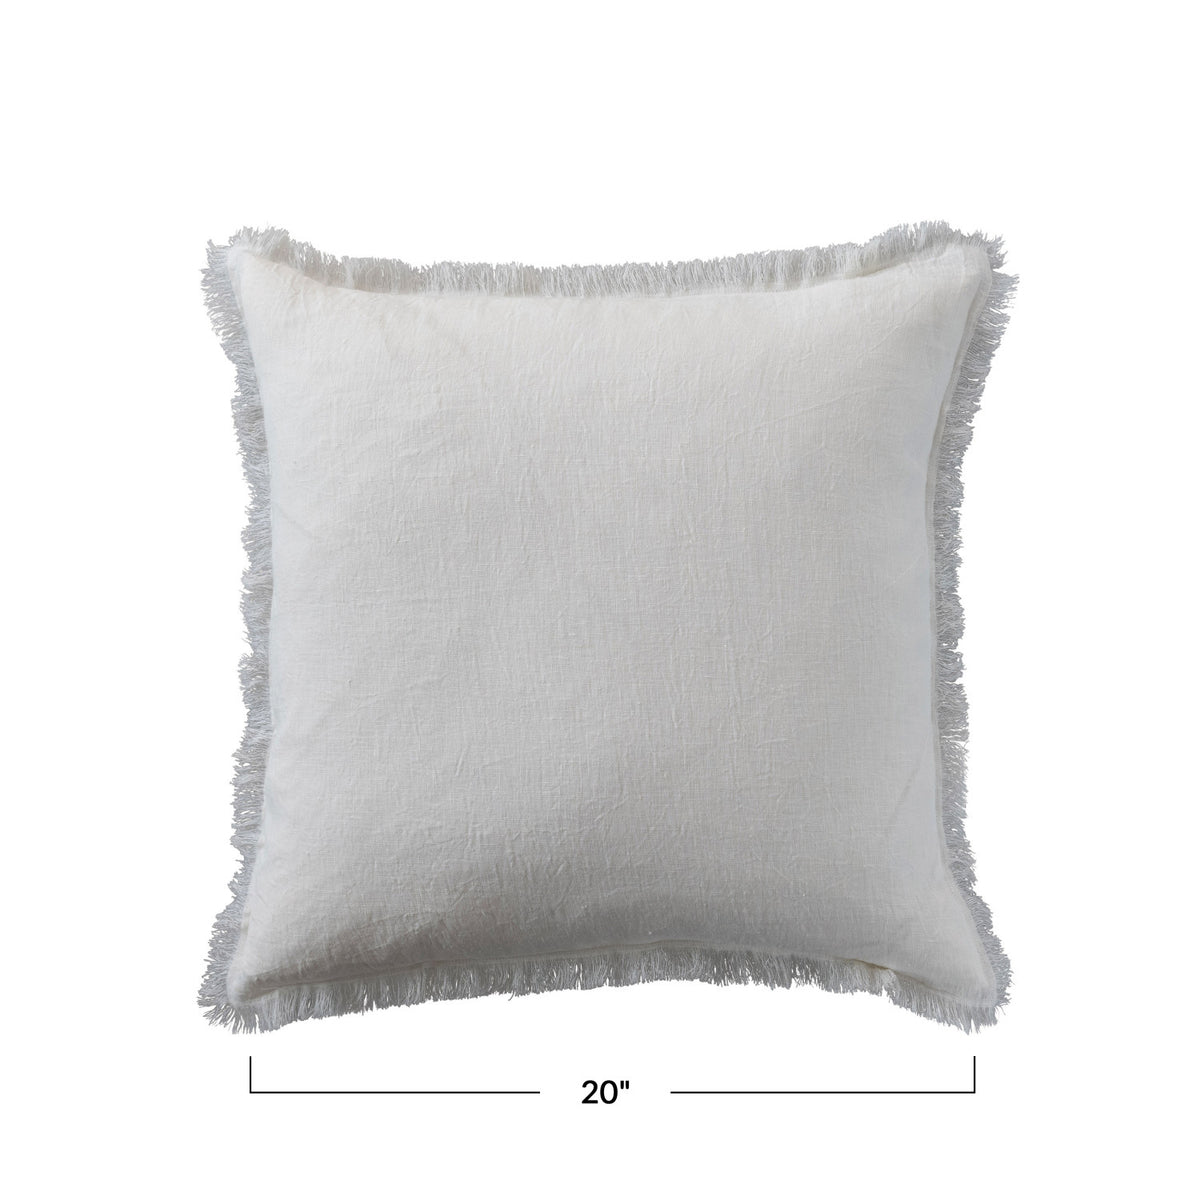 20" Square Stonewashed Linen Pillow w/Fringe